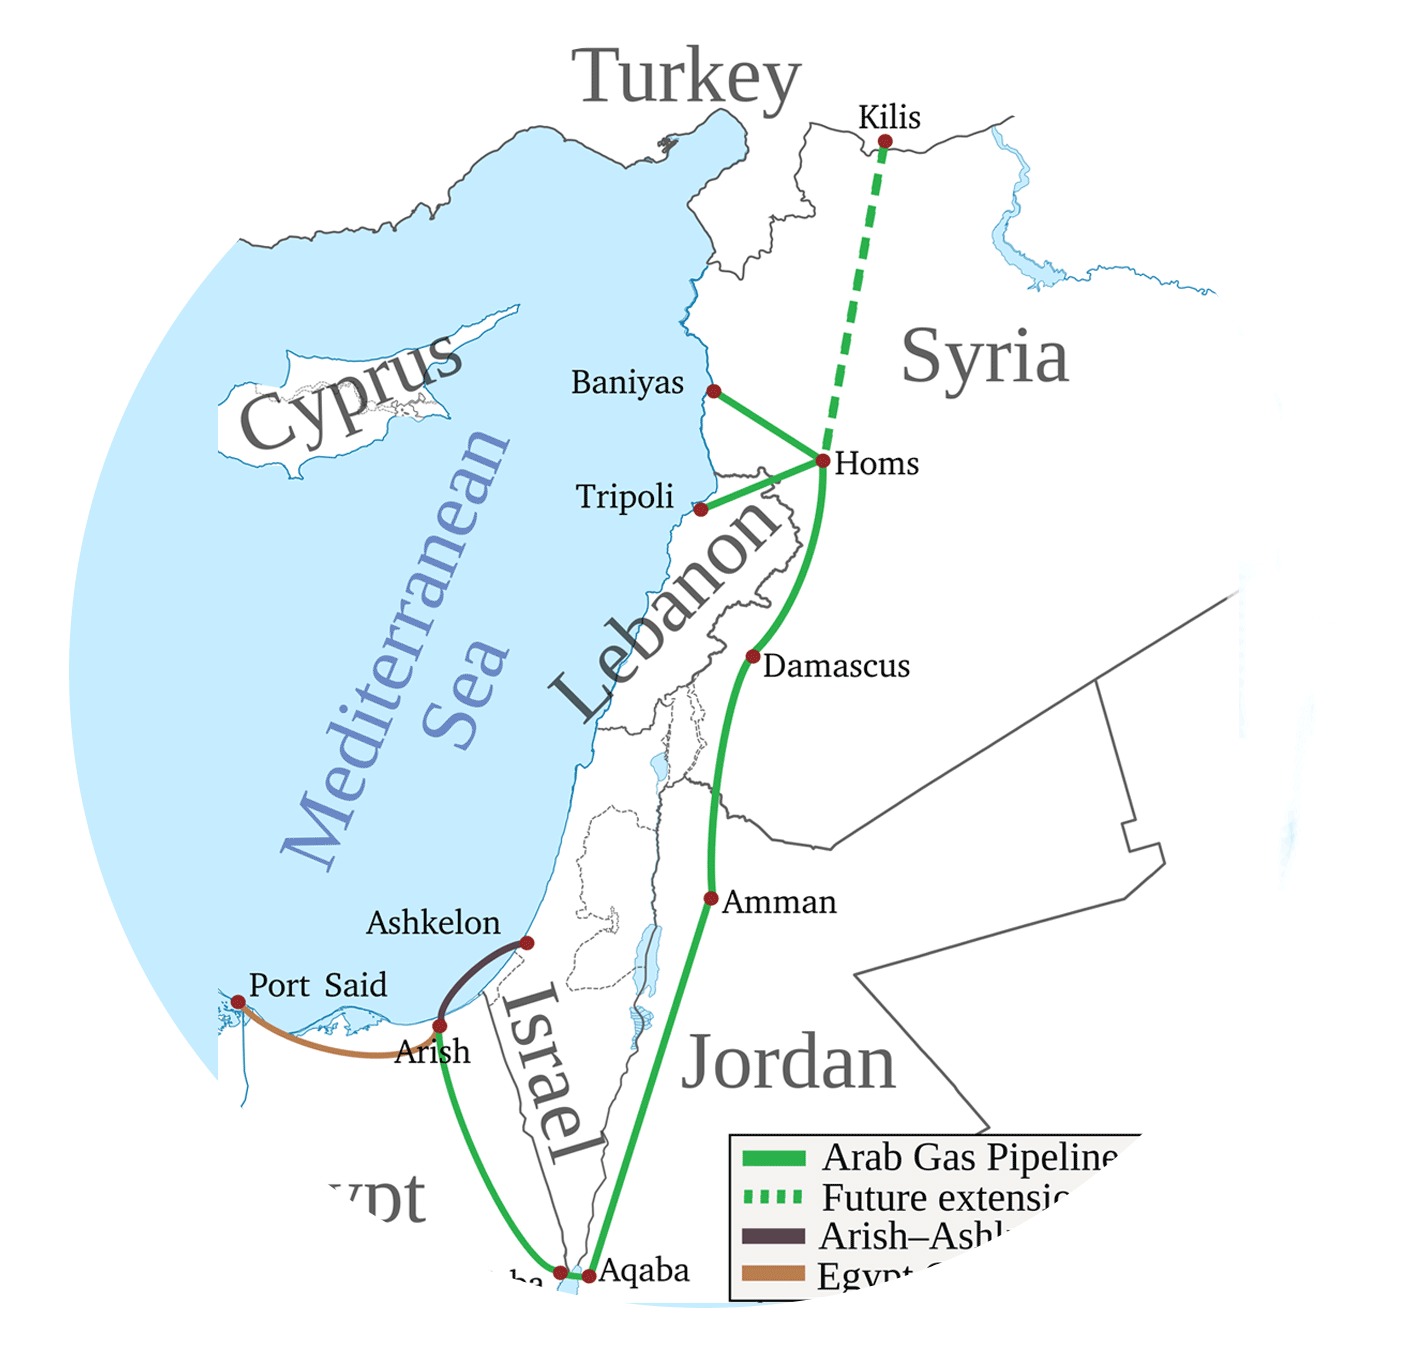 Arab gas pipeline